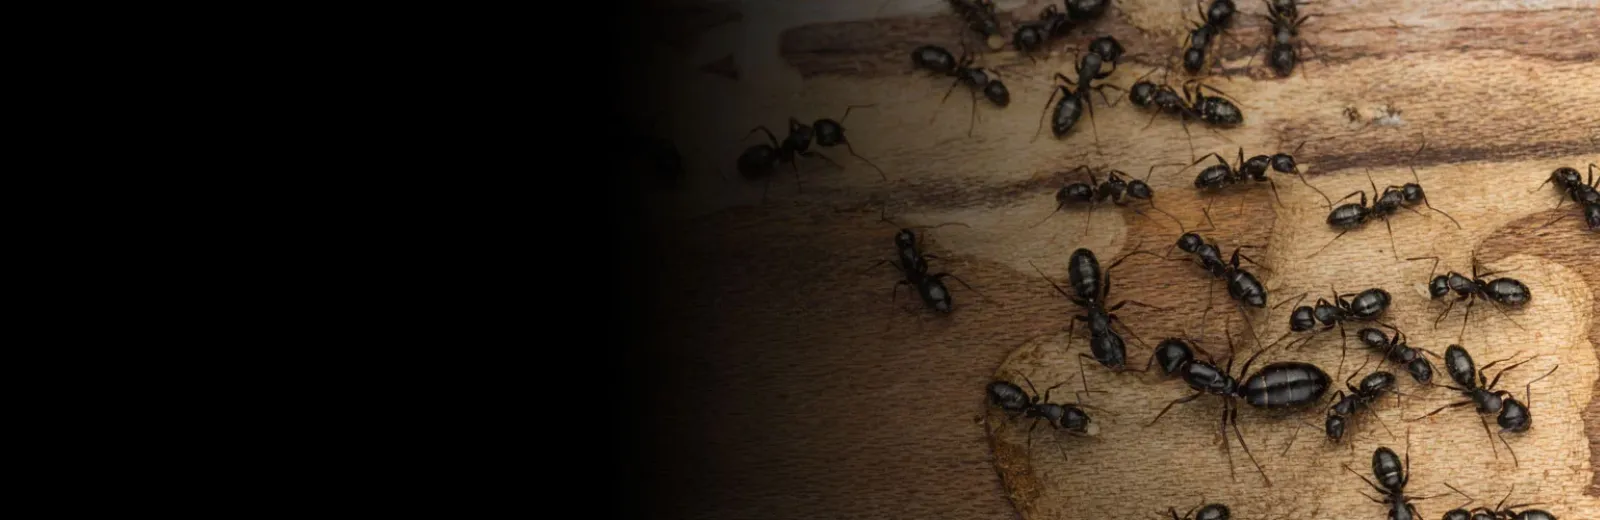 Ants on a floor